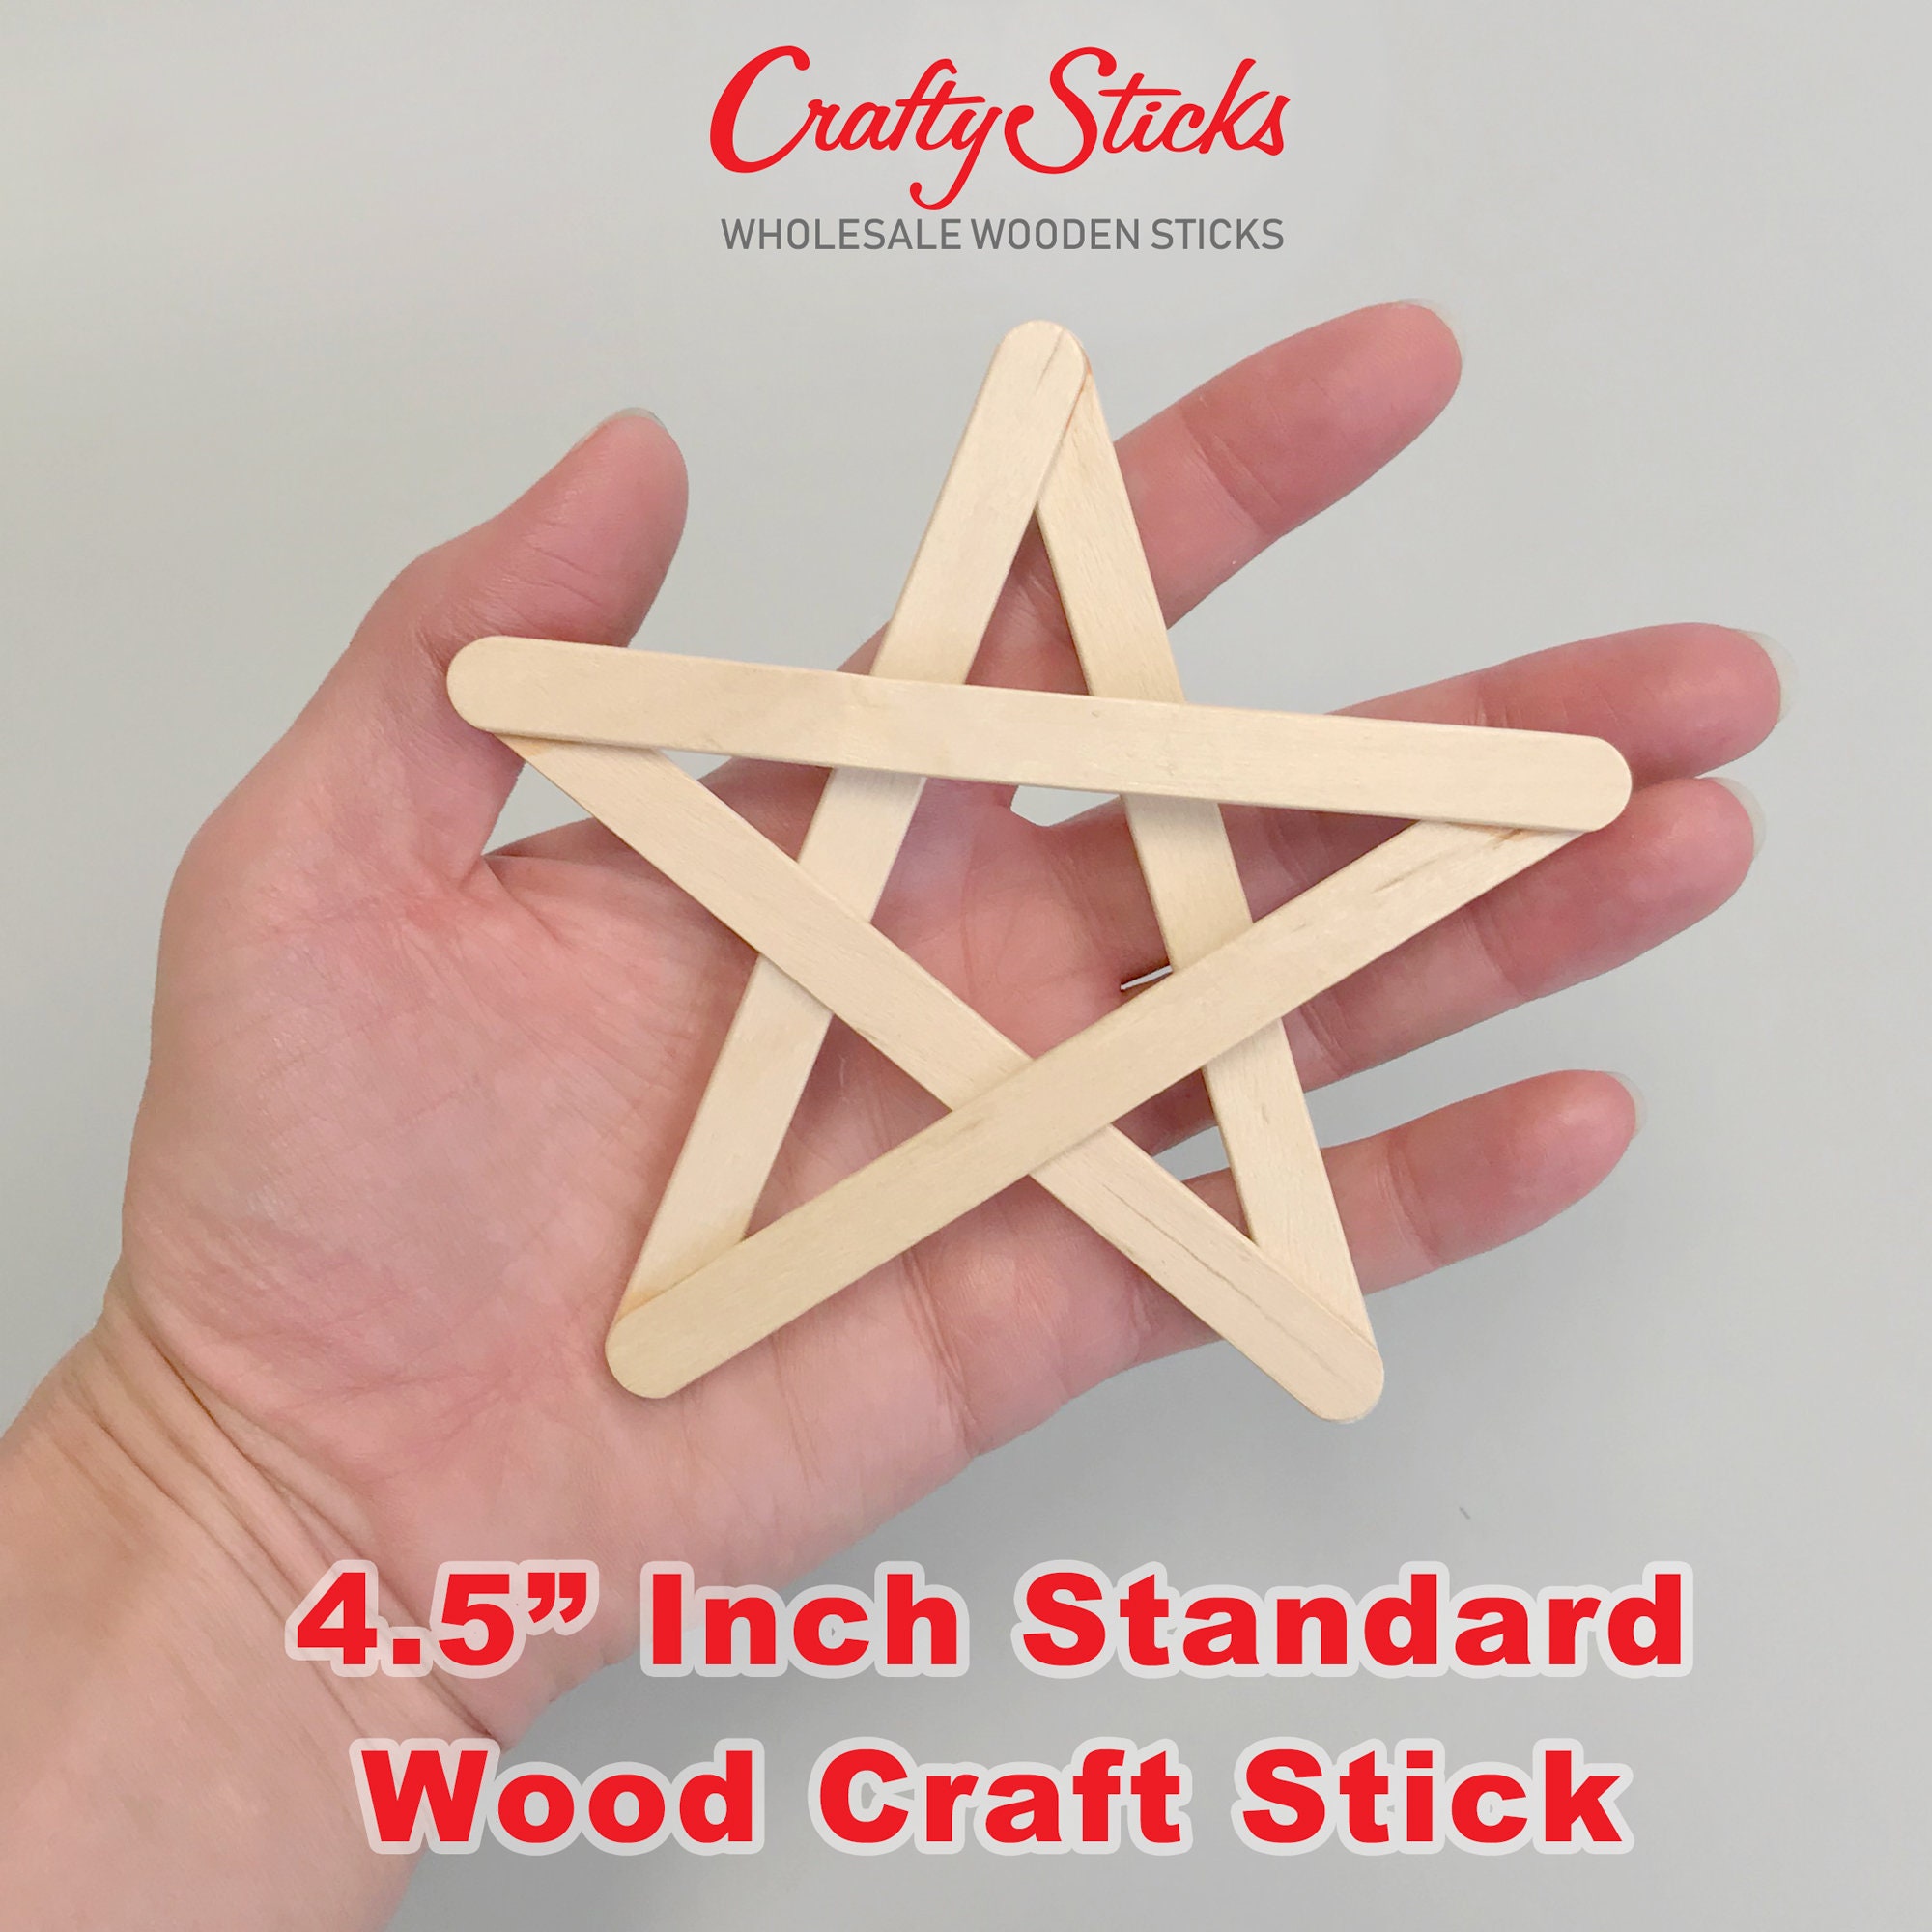 100 Sticks - Wood Craft Popsicle Sticks 4.5 inch -Green